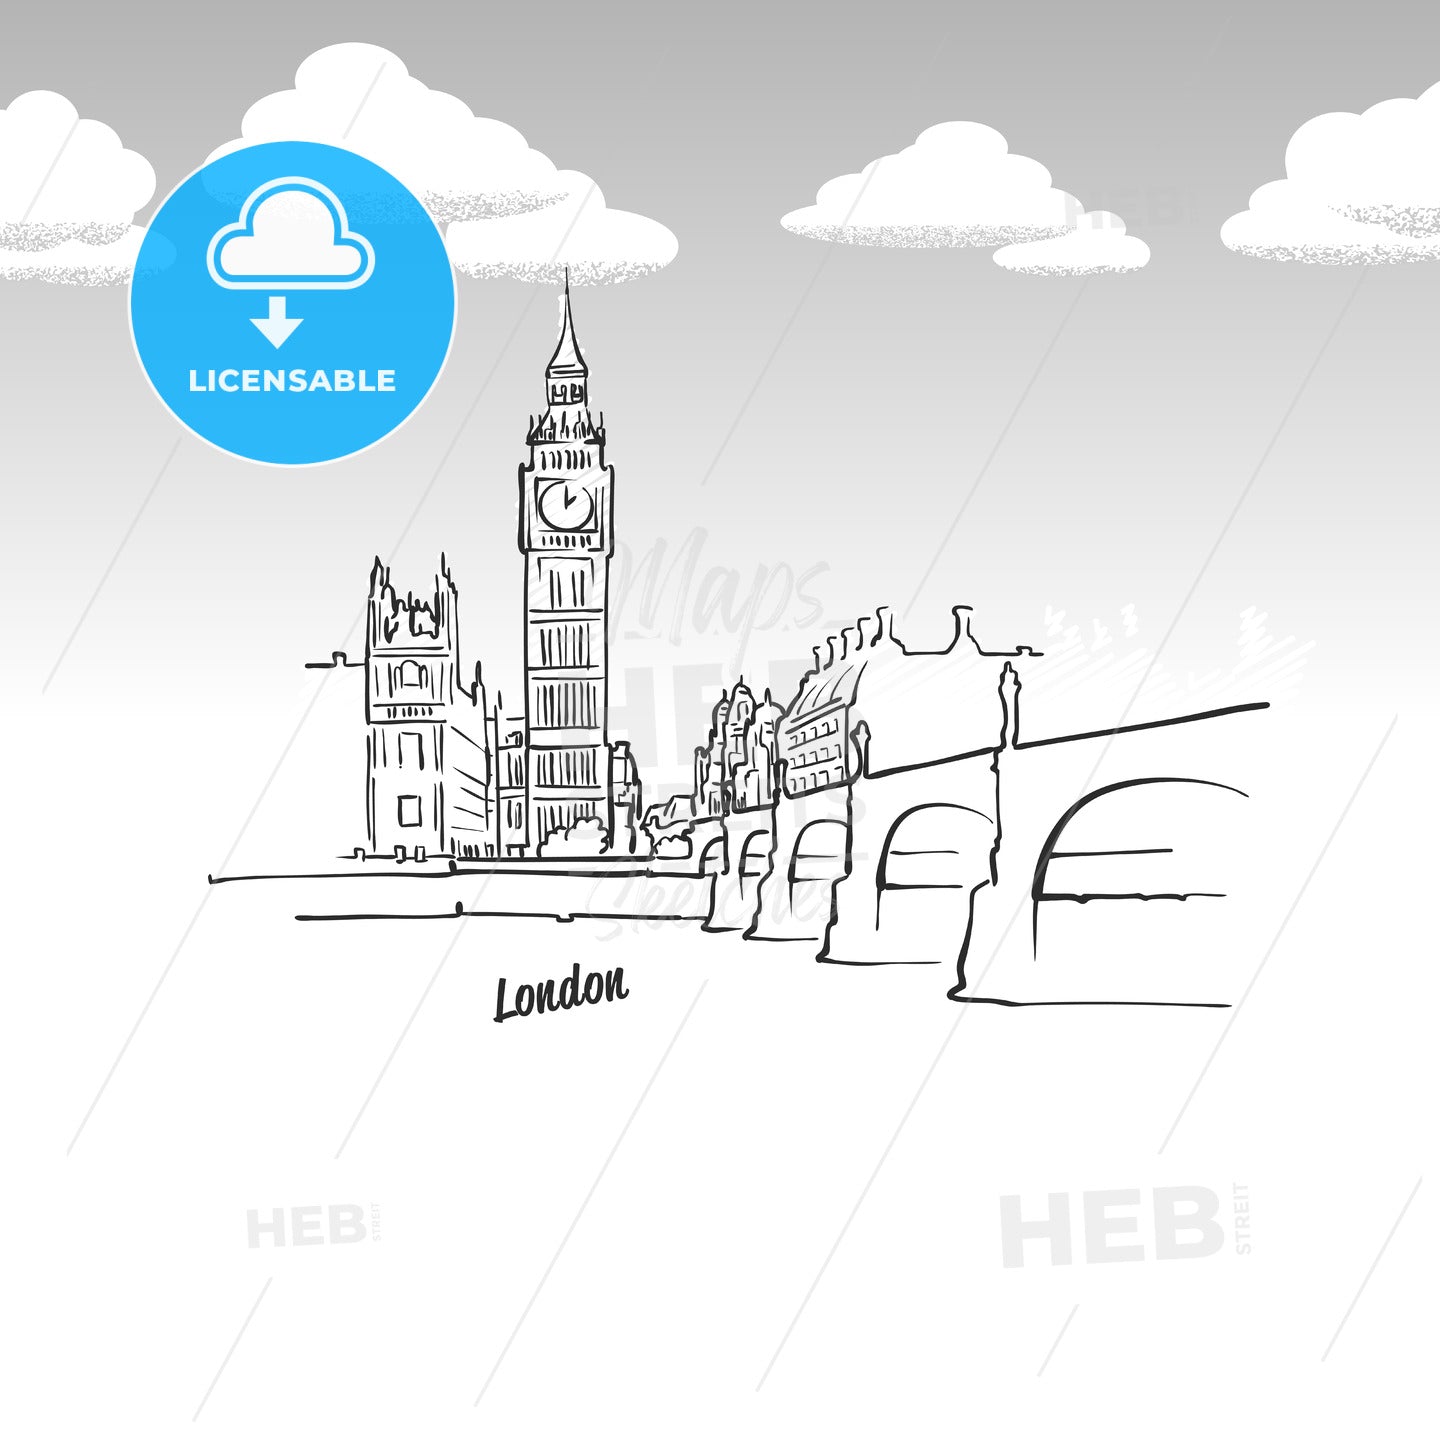 London, United Kingdom famous landmark sketch – instant download